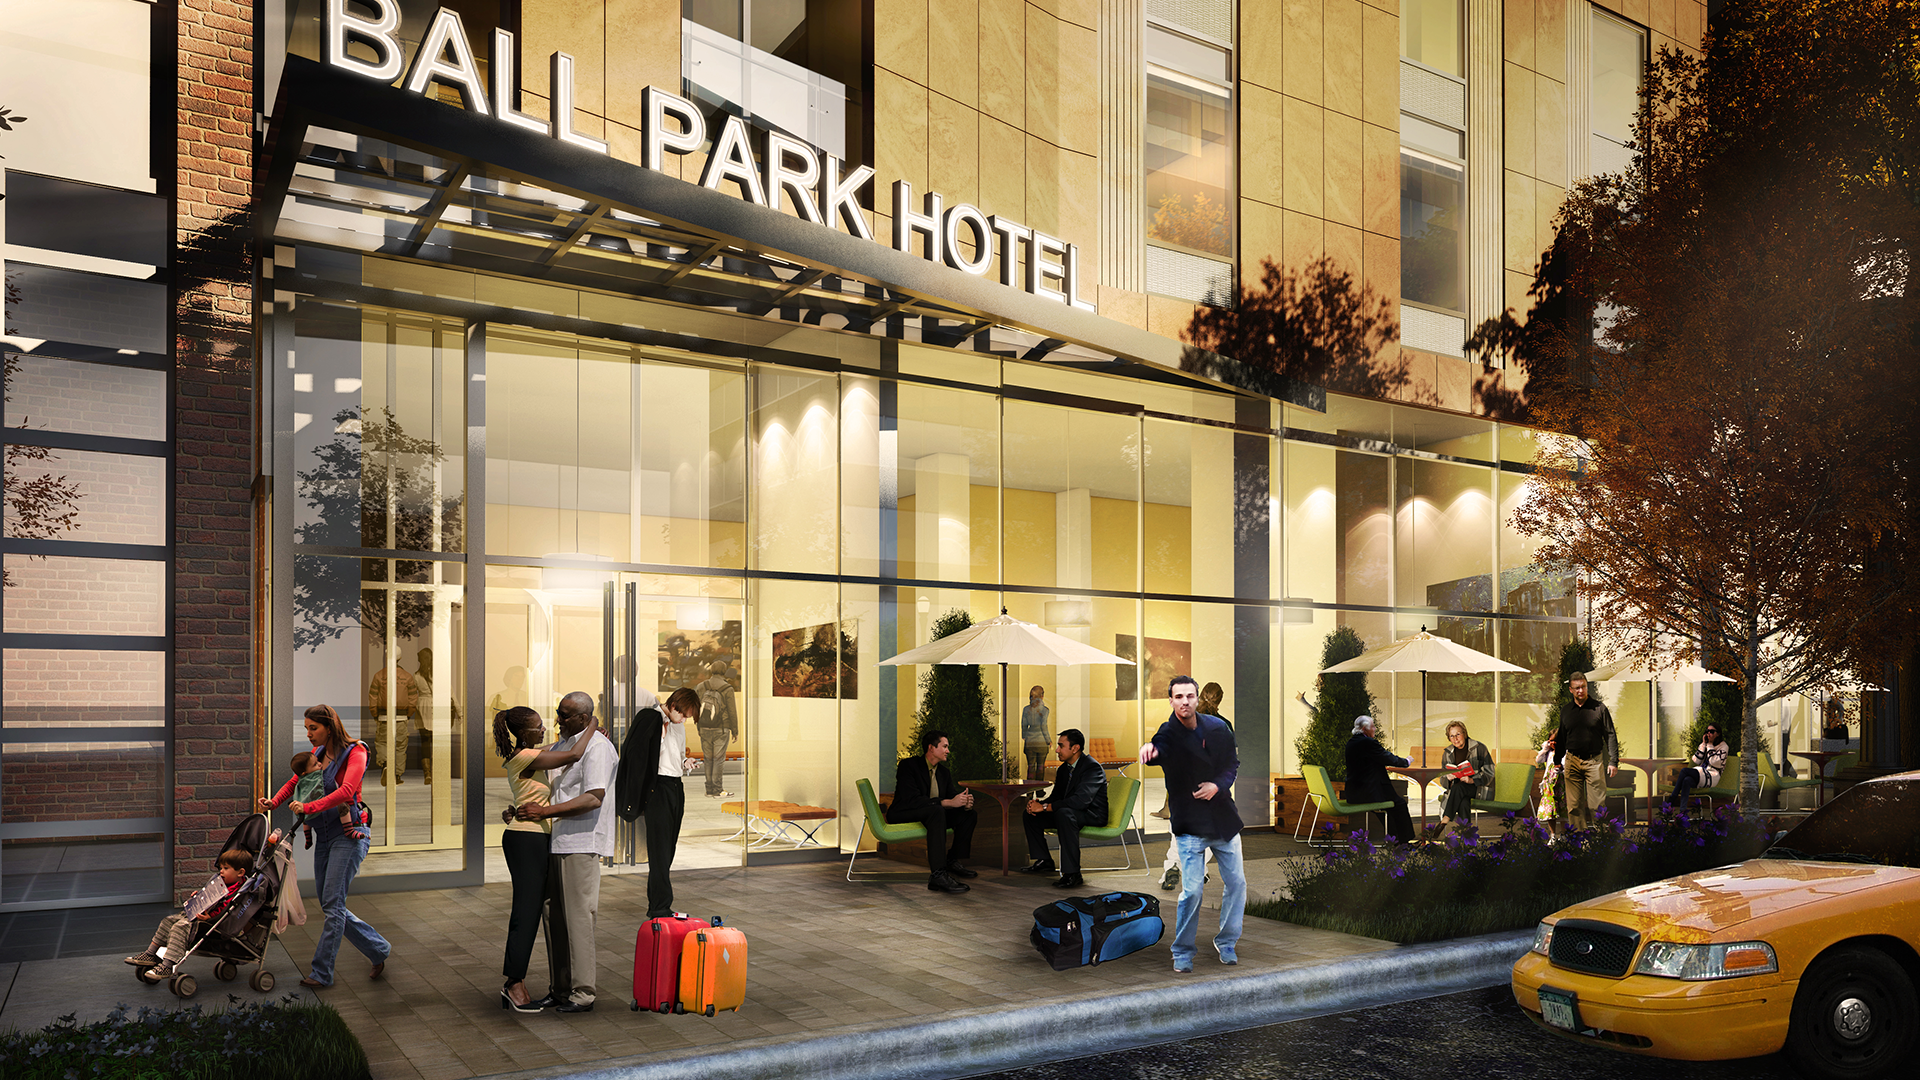 dc-ballpark-hotel-entry-rendering